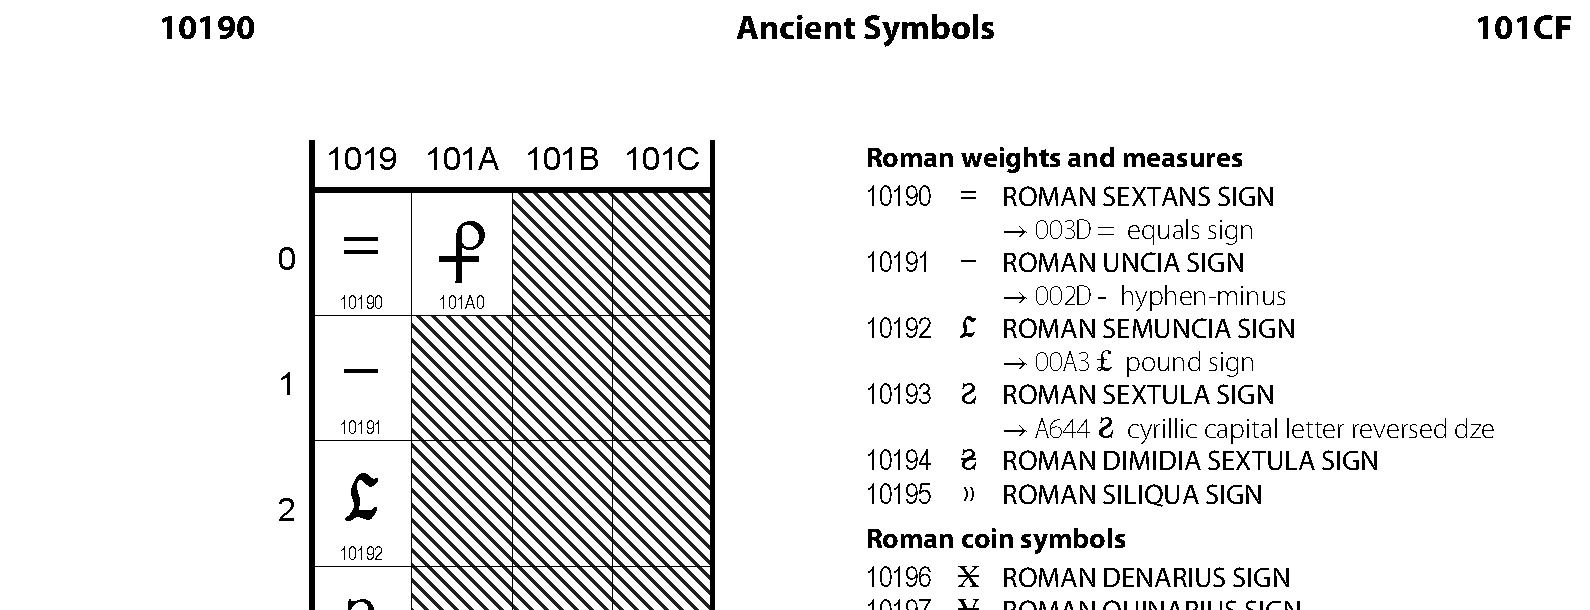 Unicode - Ancient Symbols